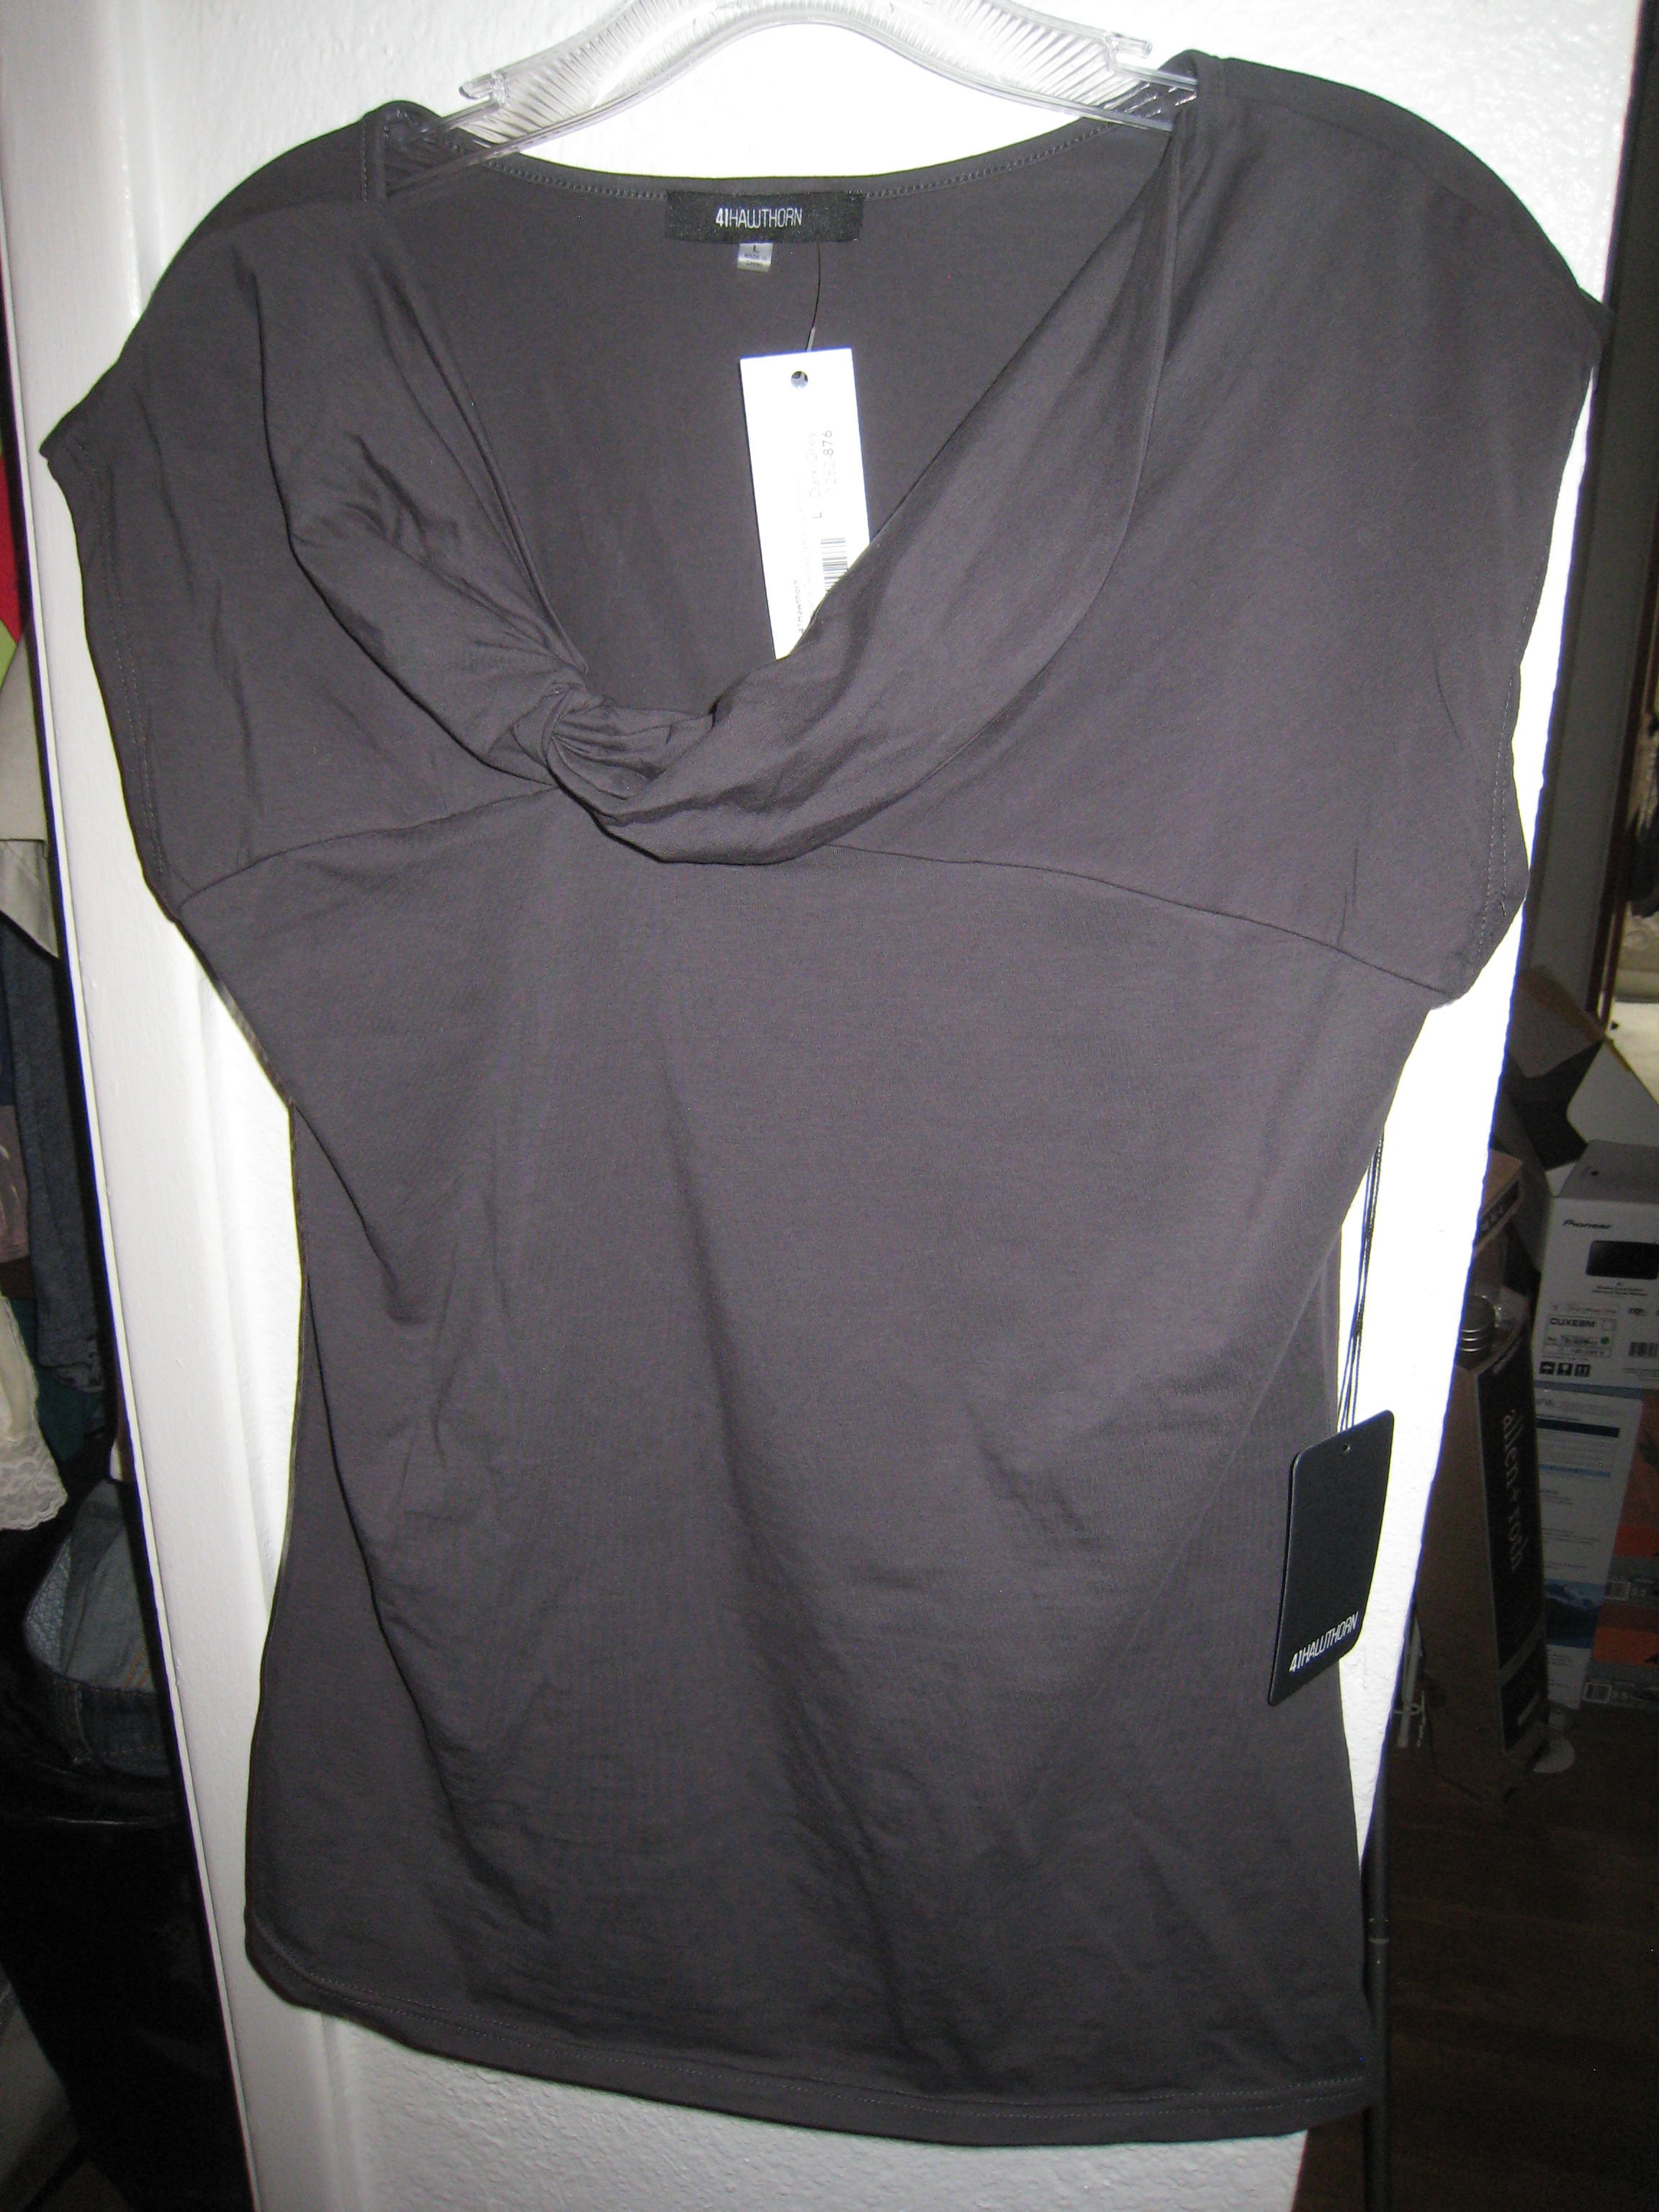 41Hawthron Cleopatra Twisted Neckline Knit Shirt | Flickr - Photo Sharing!